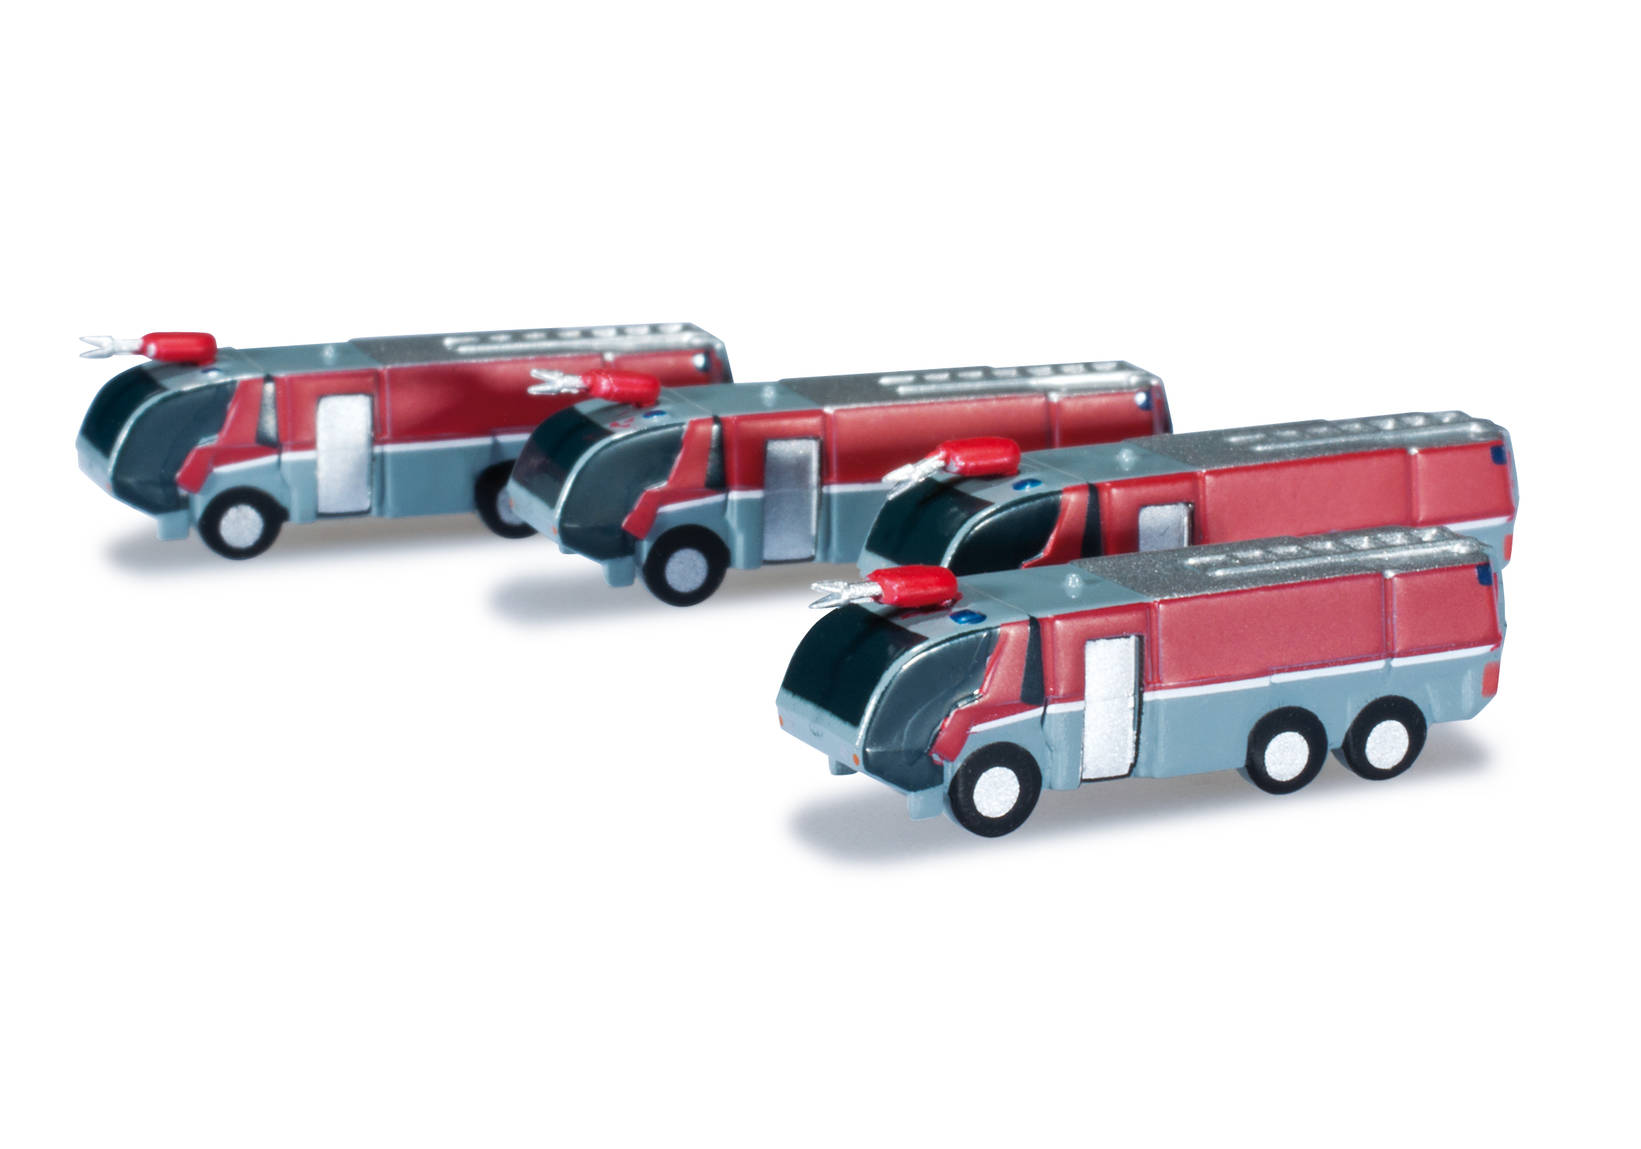 Airport accessories fire engine setContent: 4 pieces